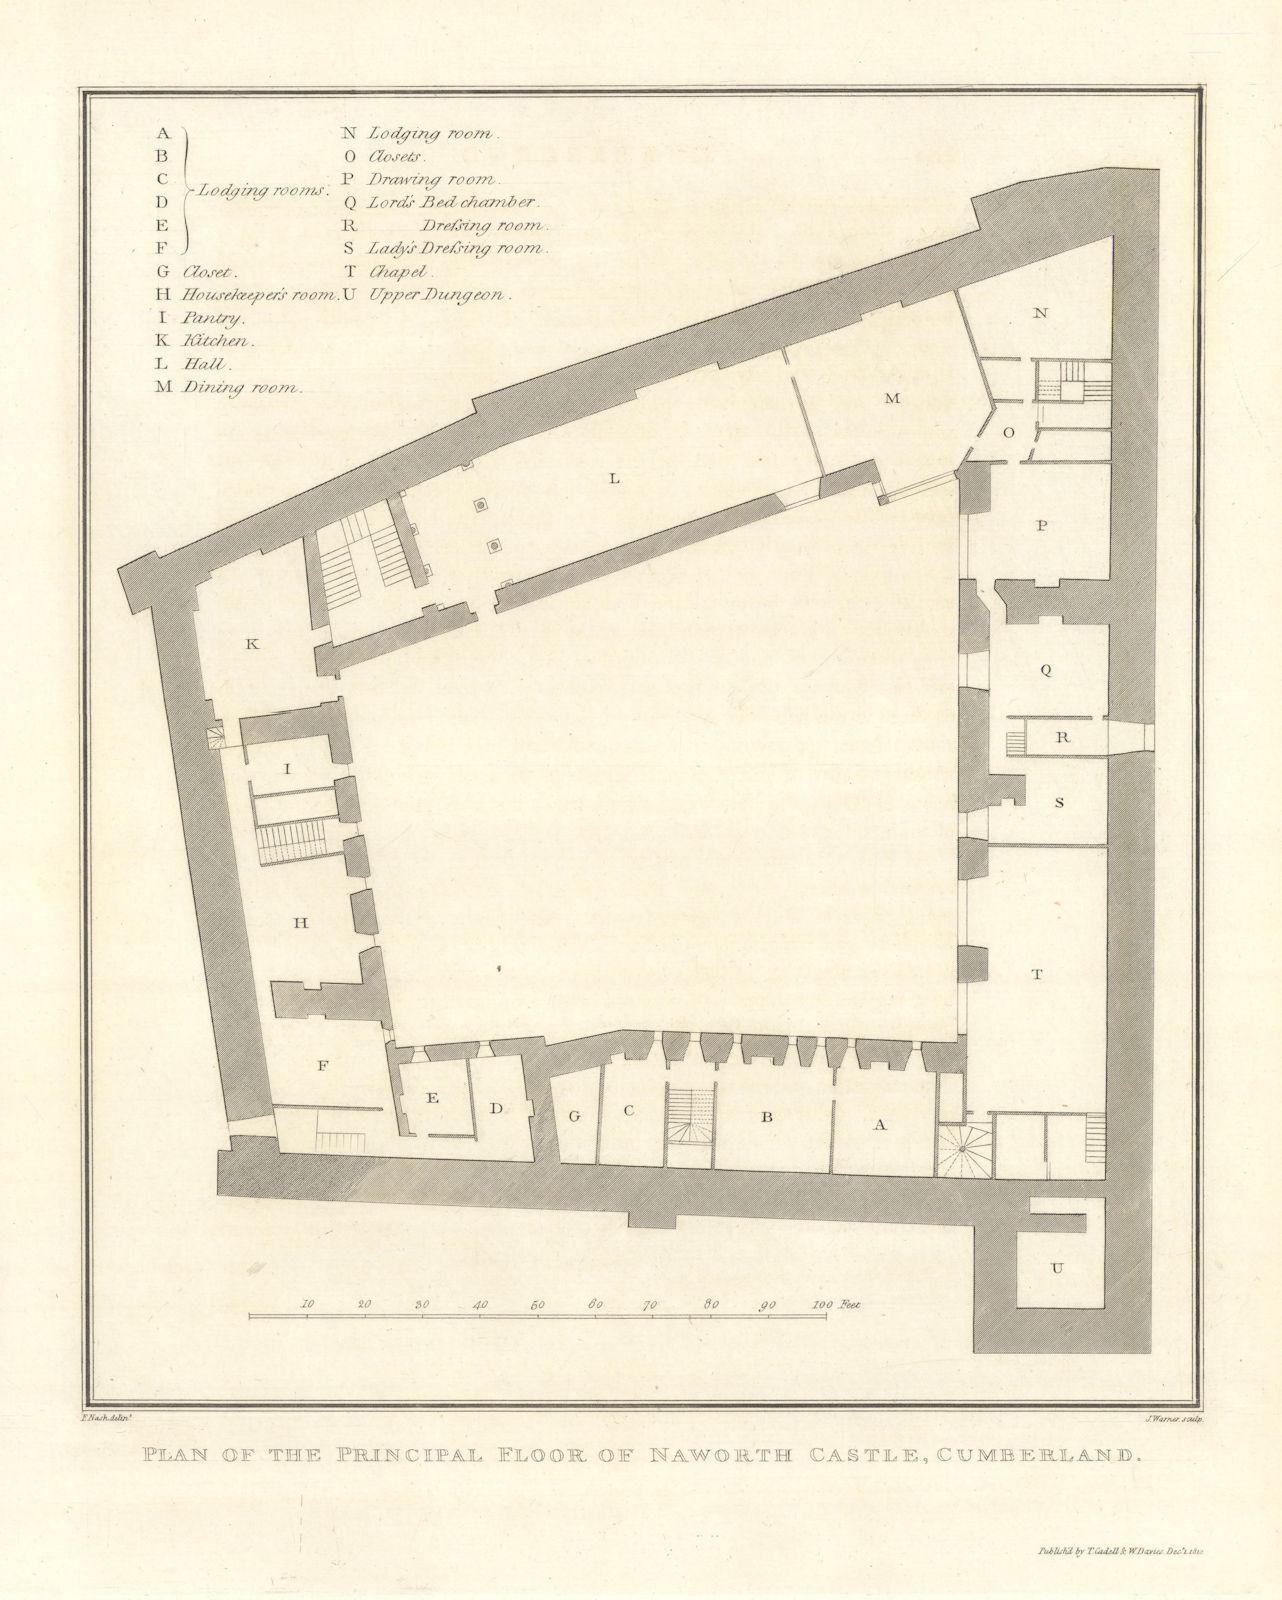 Floor plan of the main floor of Naworth Castle, Cumberland. Cumbria 1816 map